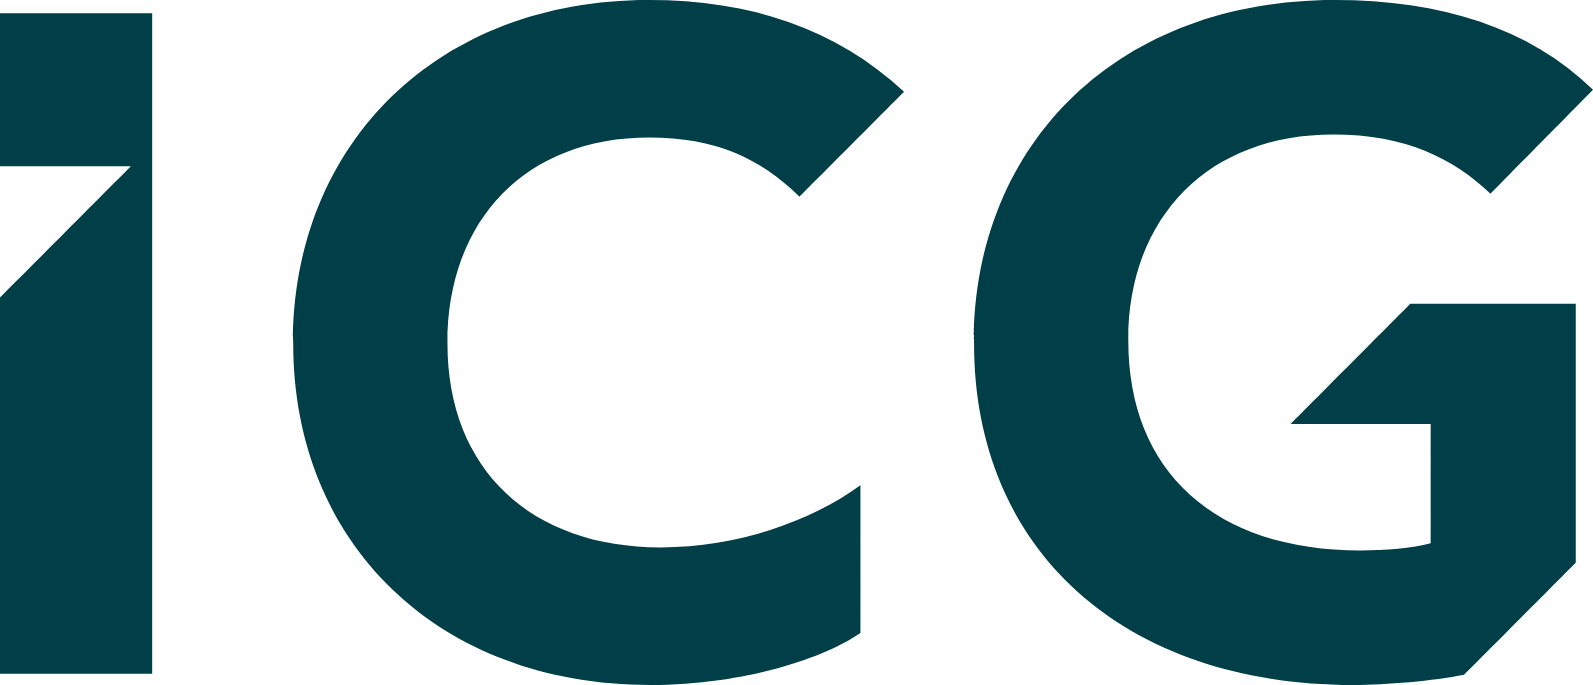 Intermediate Capital Group (ICG) logo (PNG transparent)